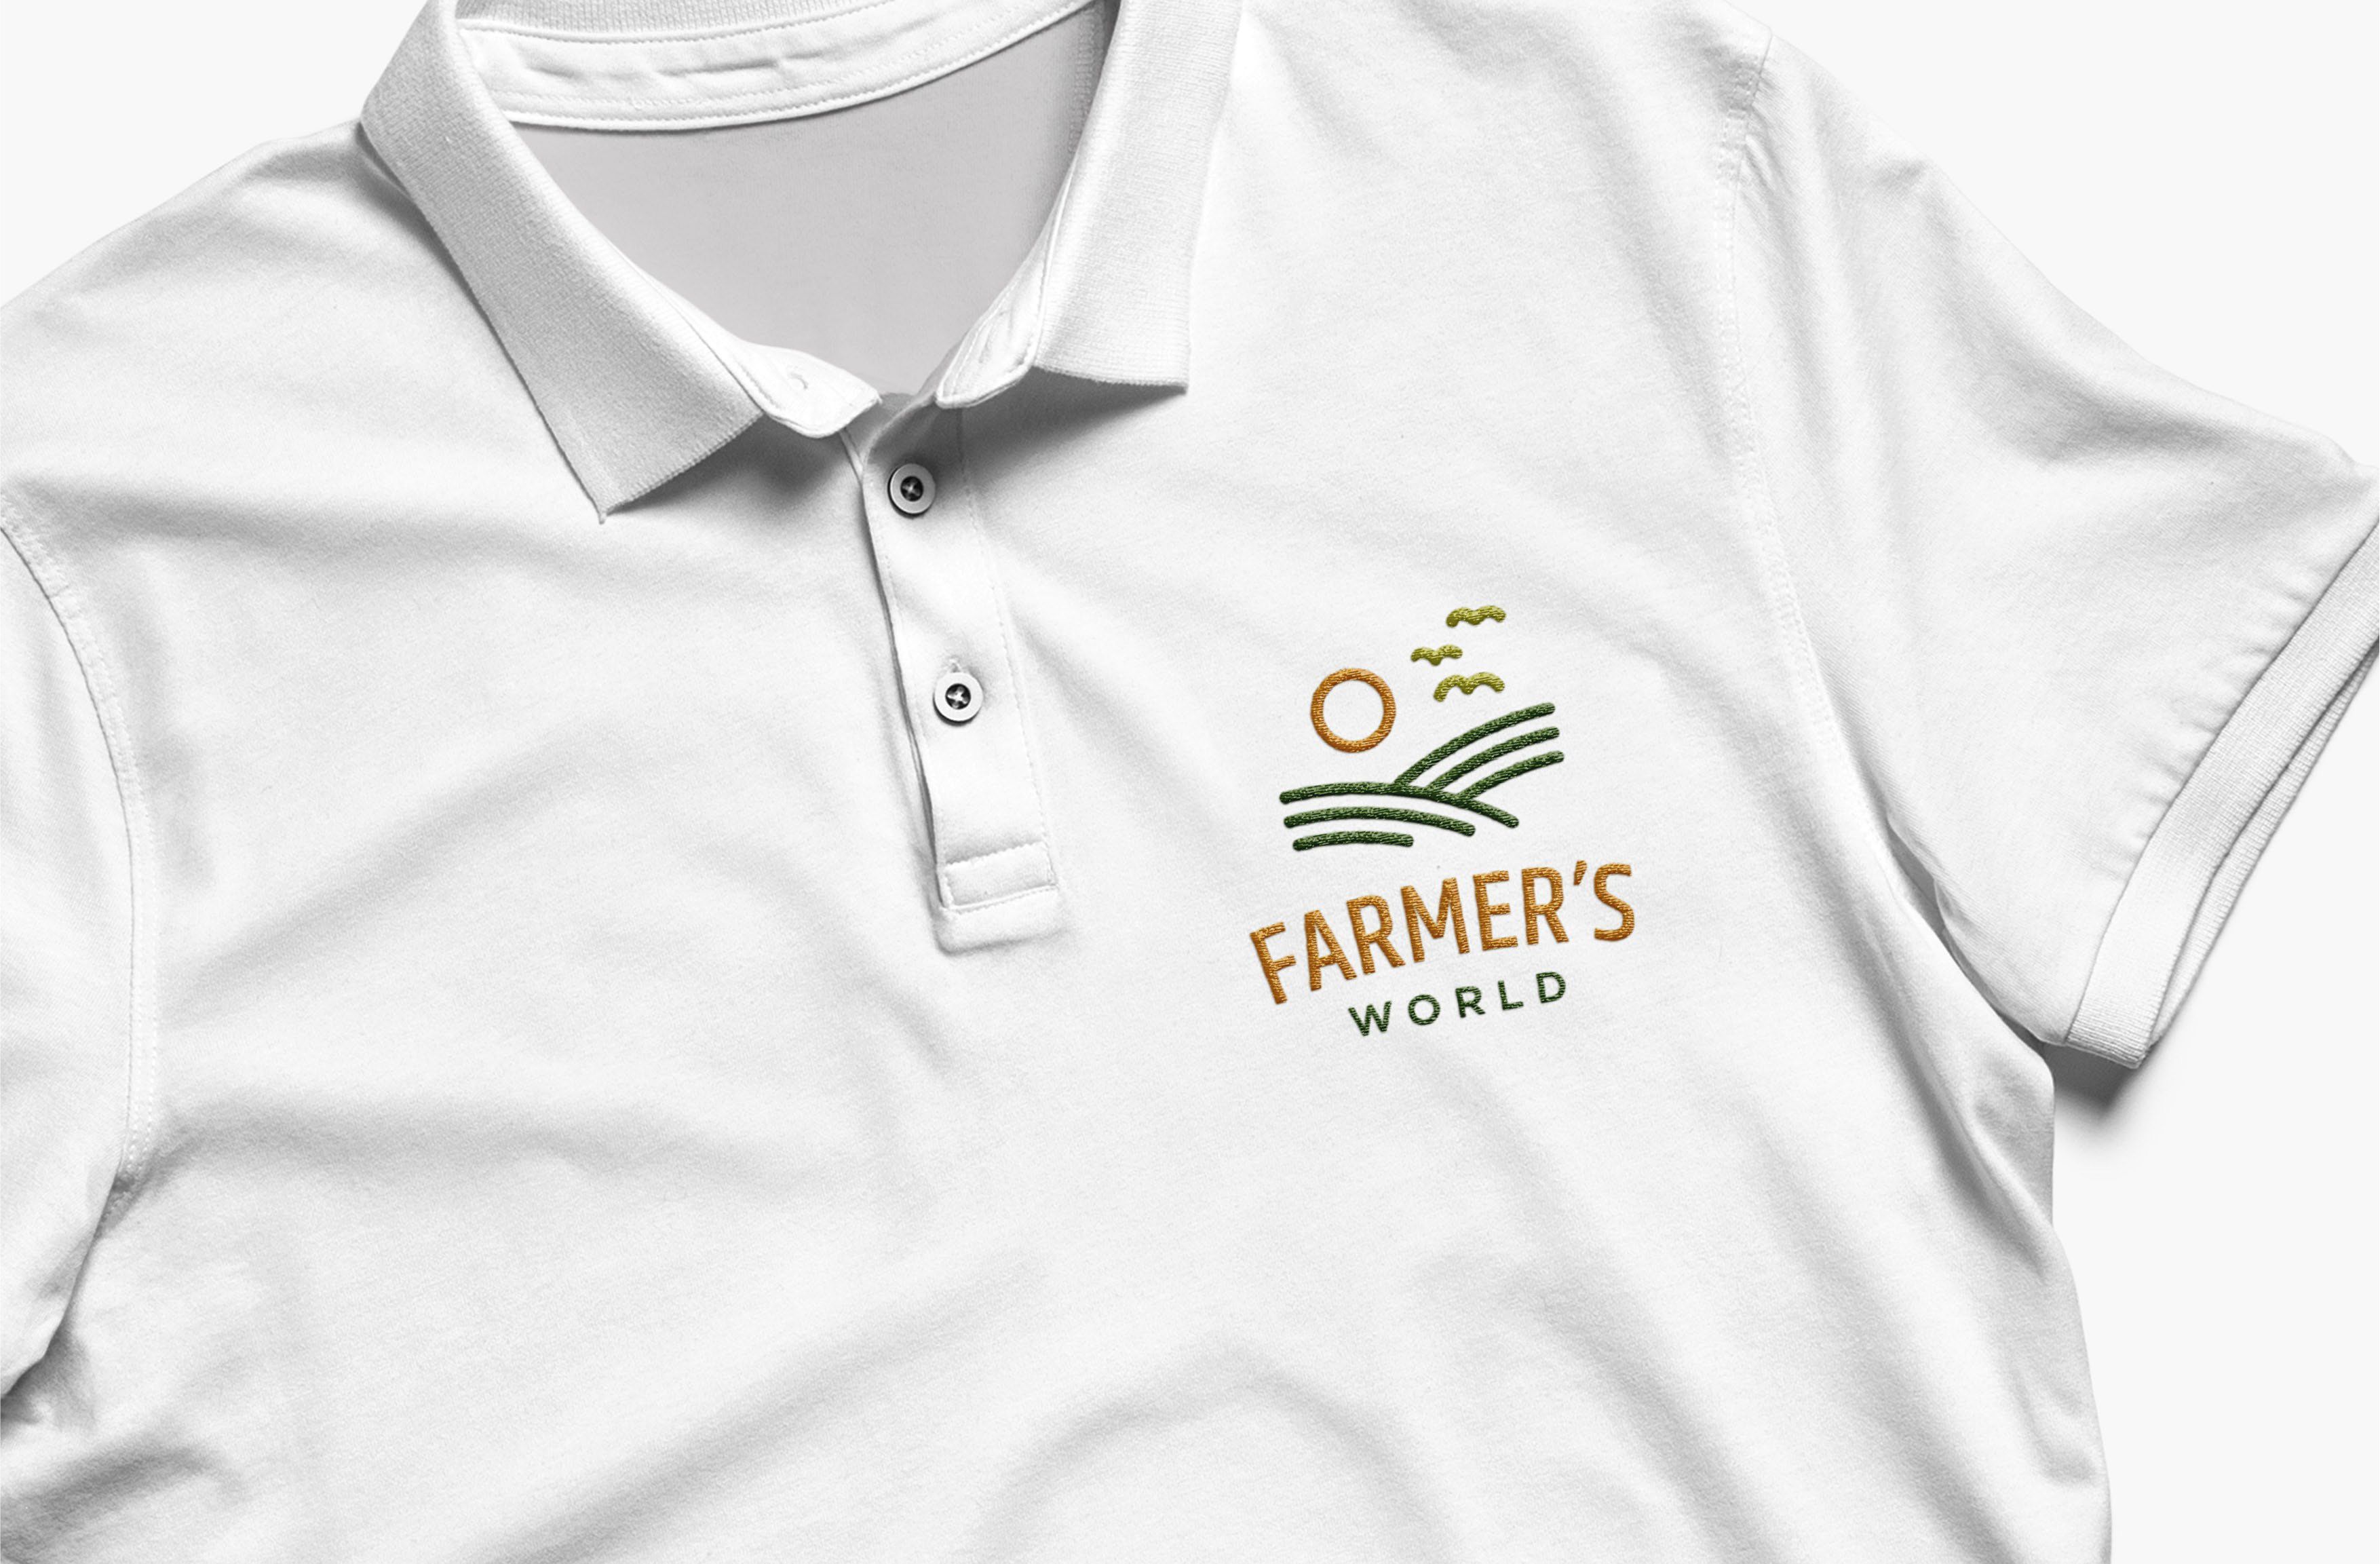 ThirdLaw branding and web design - Farmer's World -2